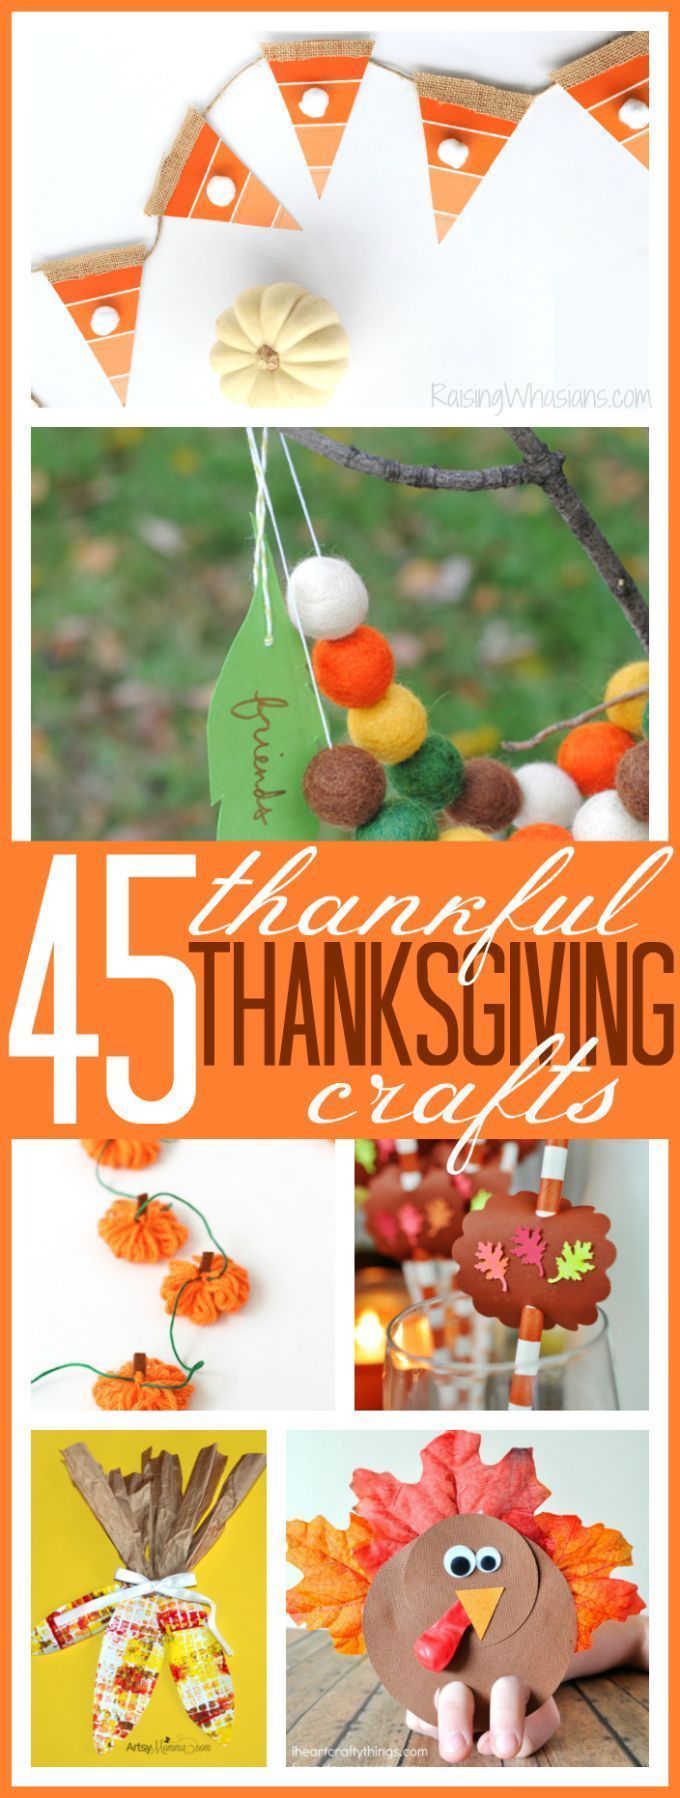 18 diy thanksgiving crafts ideas